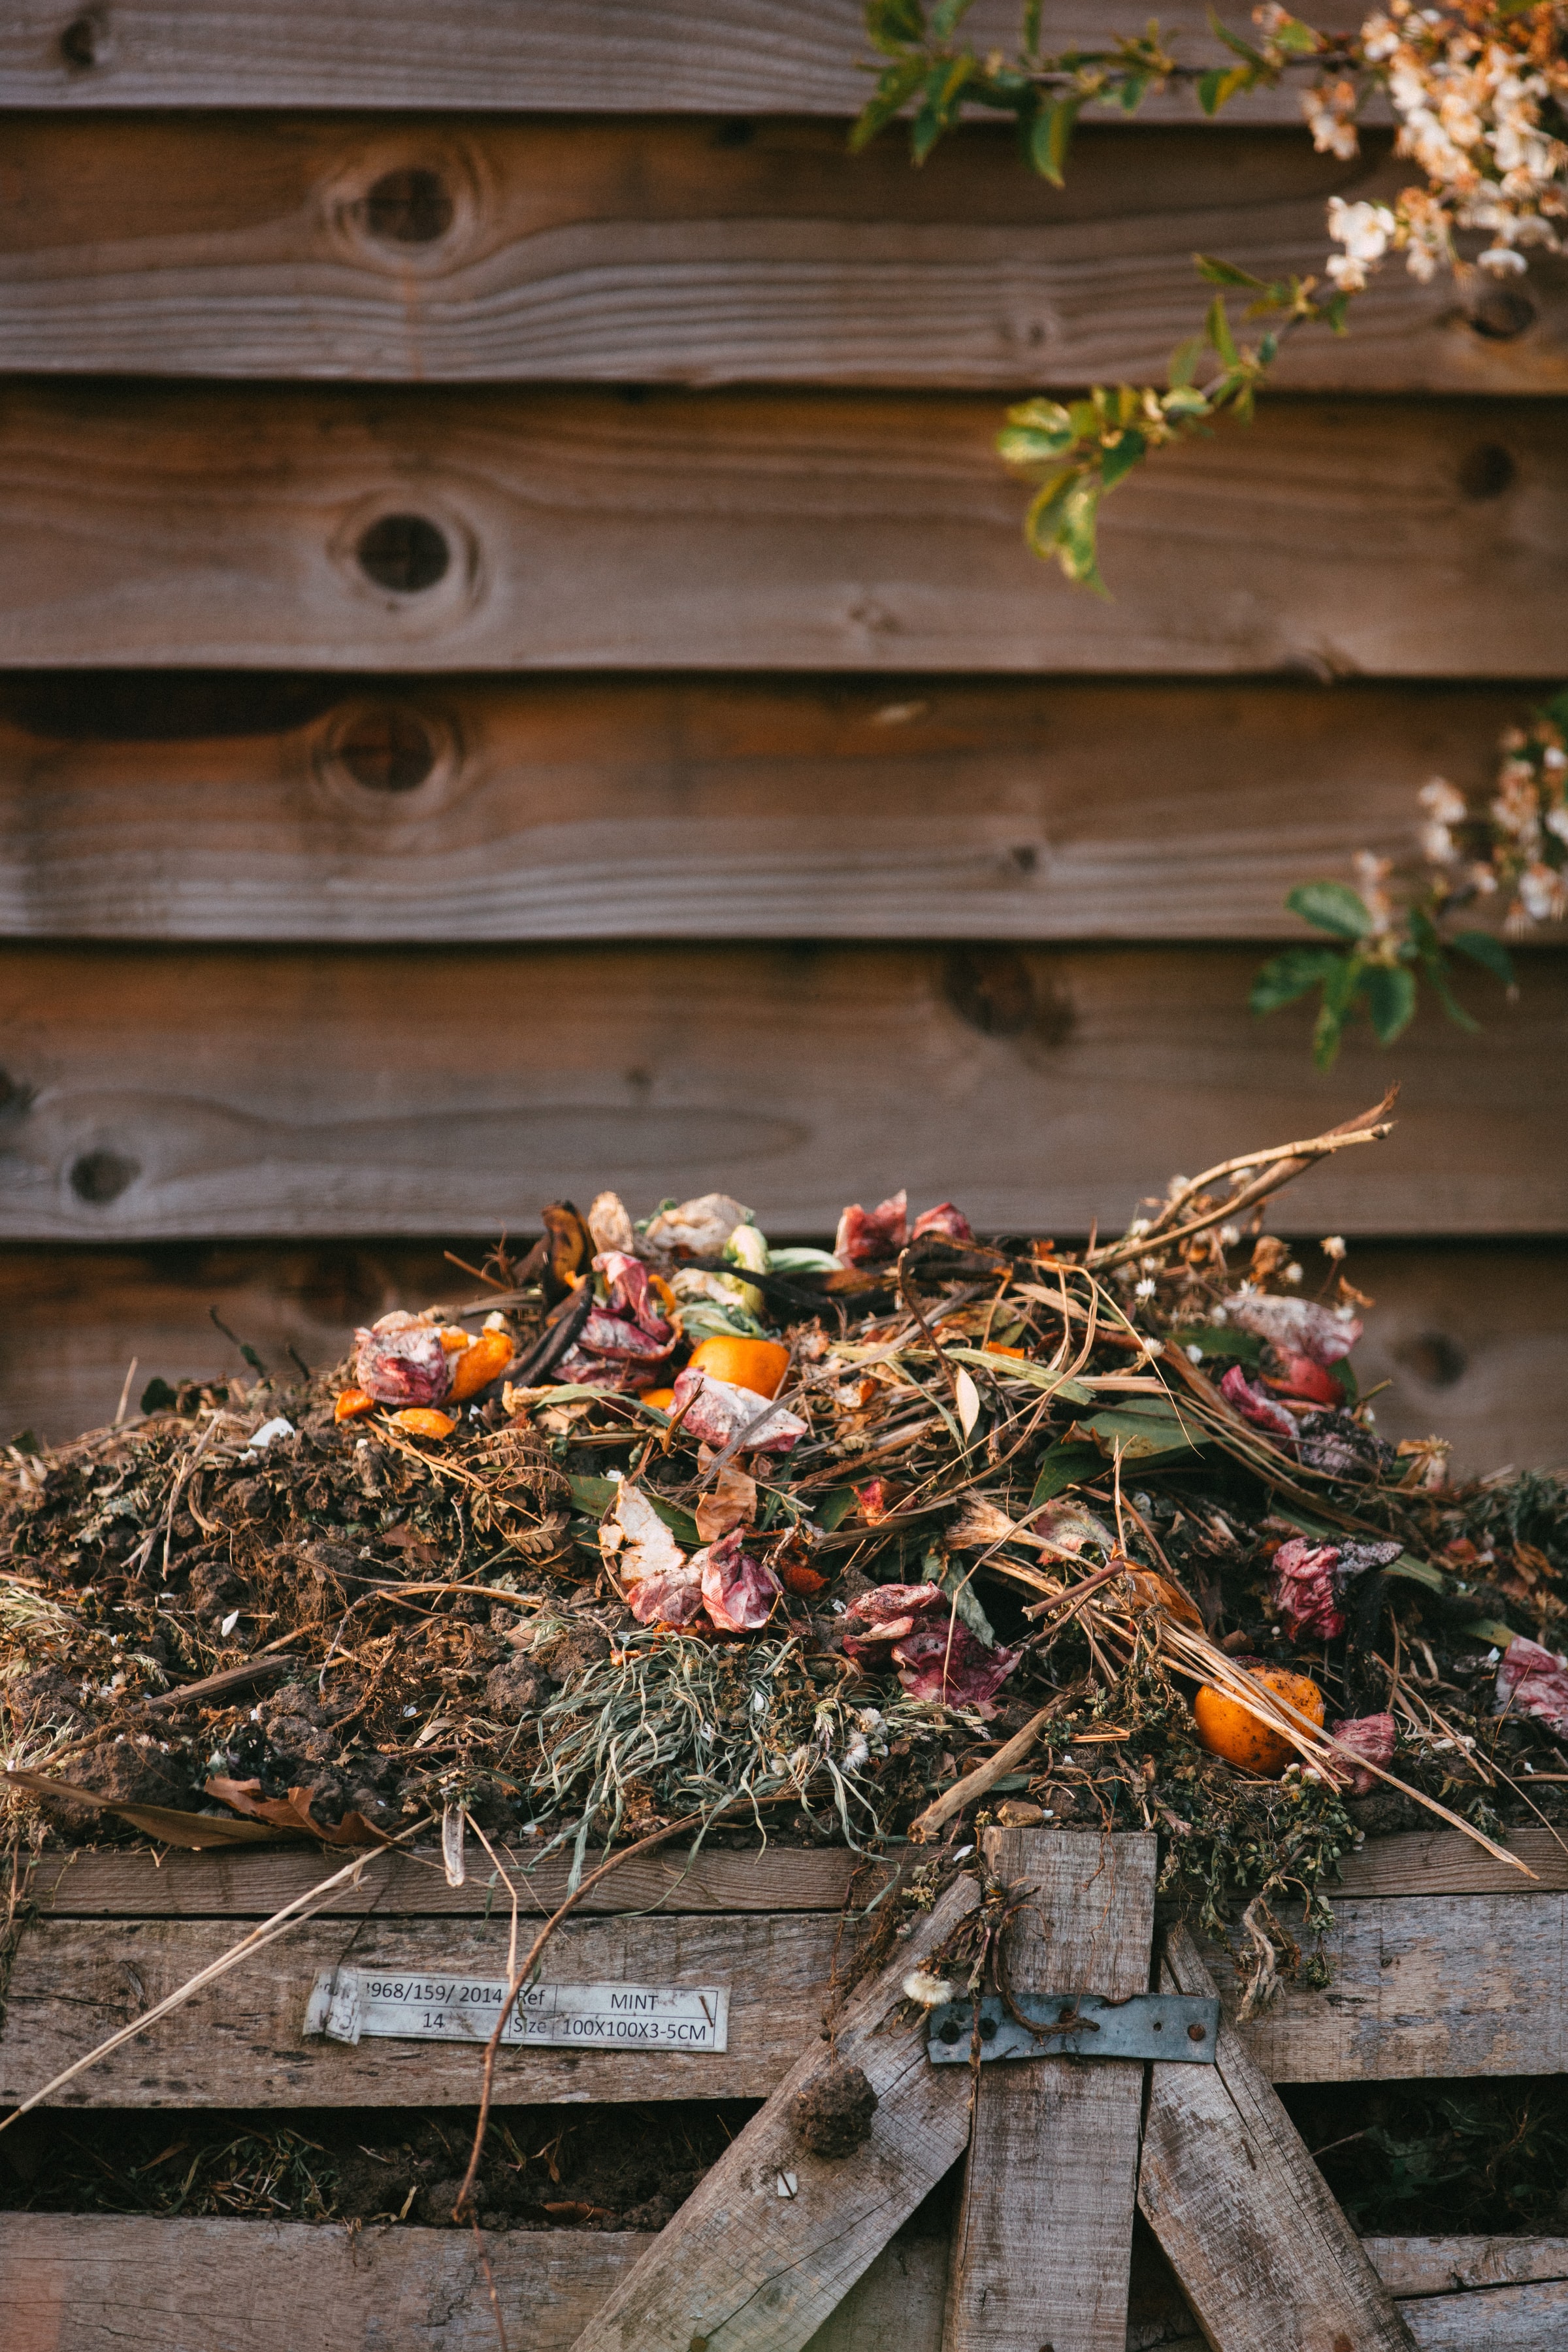 Blog post: Test je kennis over compost in 5 minuten!